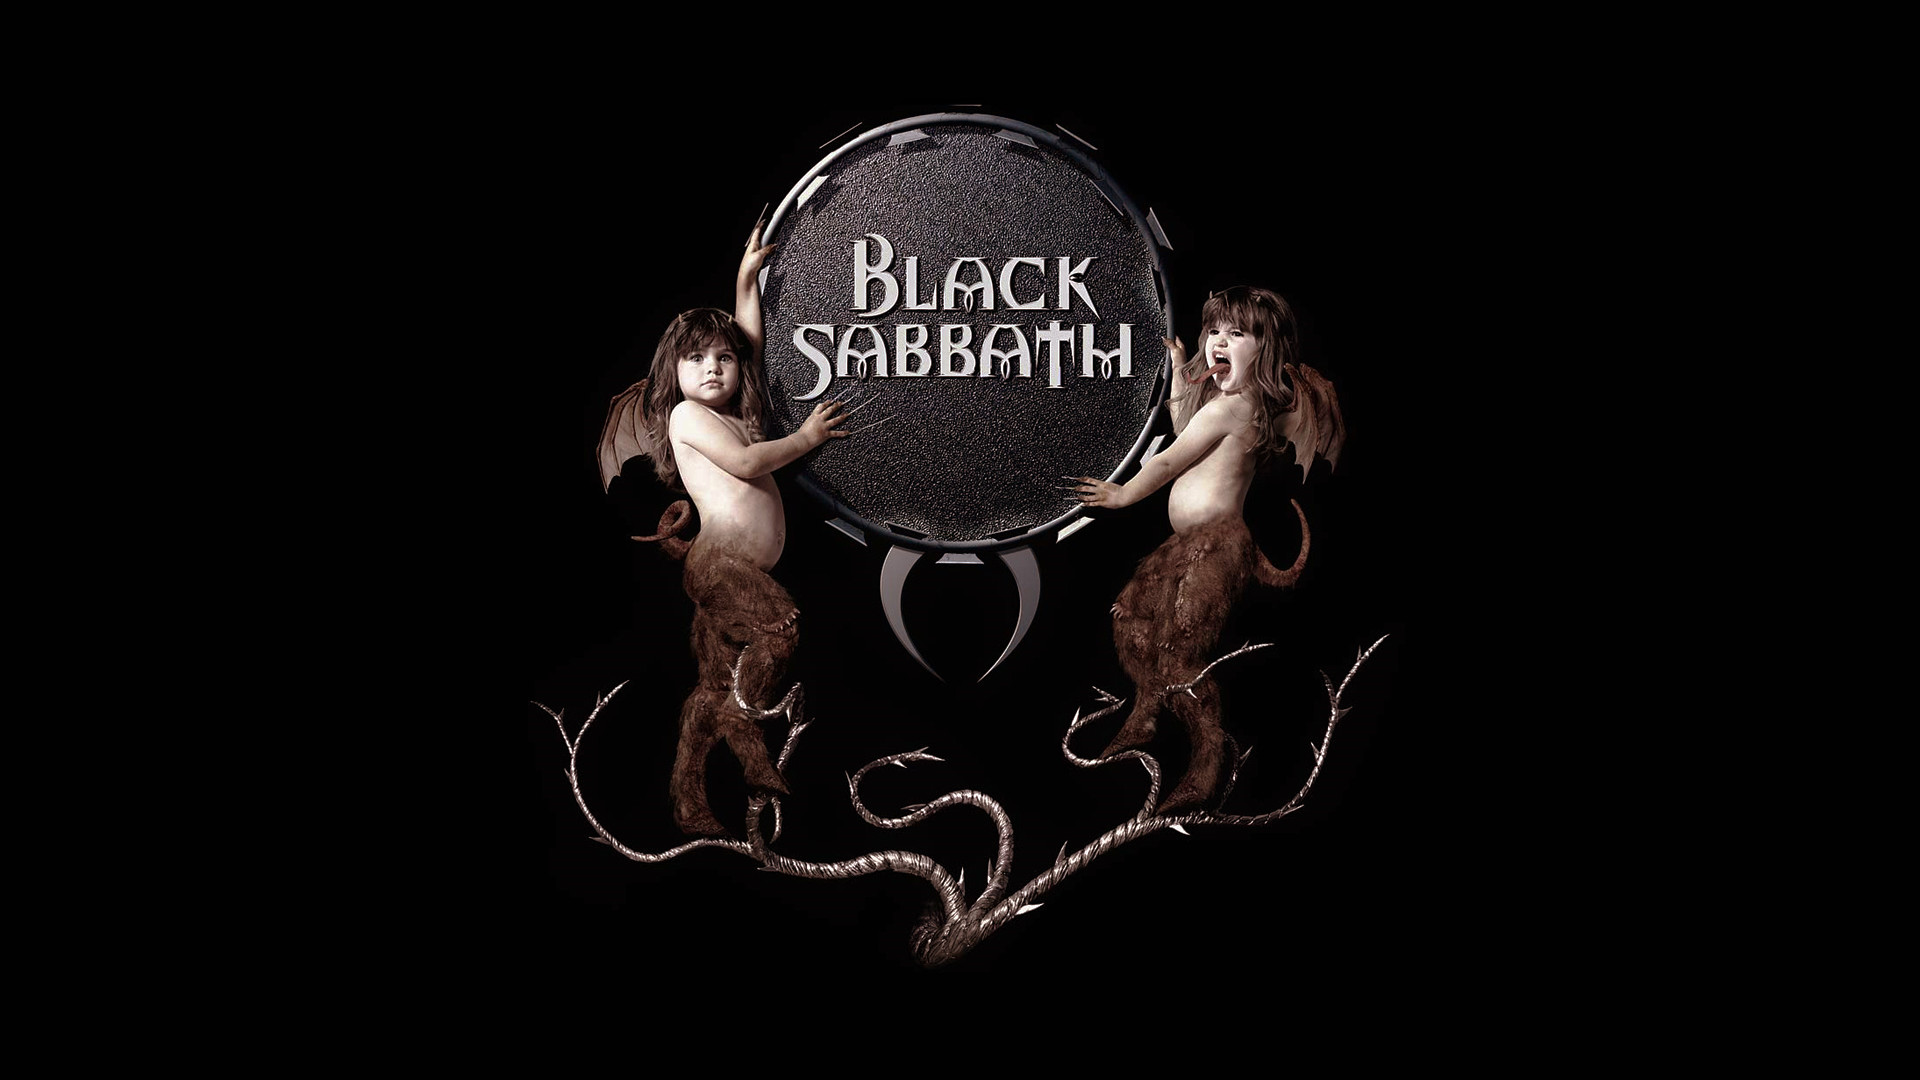 1920x1080 Black Sabbath by ORANGEMAN80 Black Sabbath by ORANGEMAN80